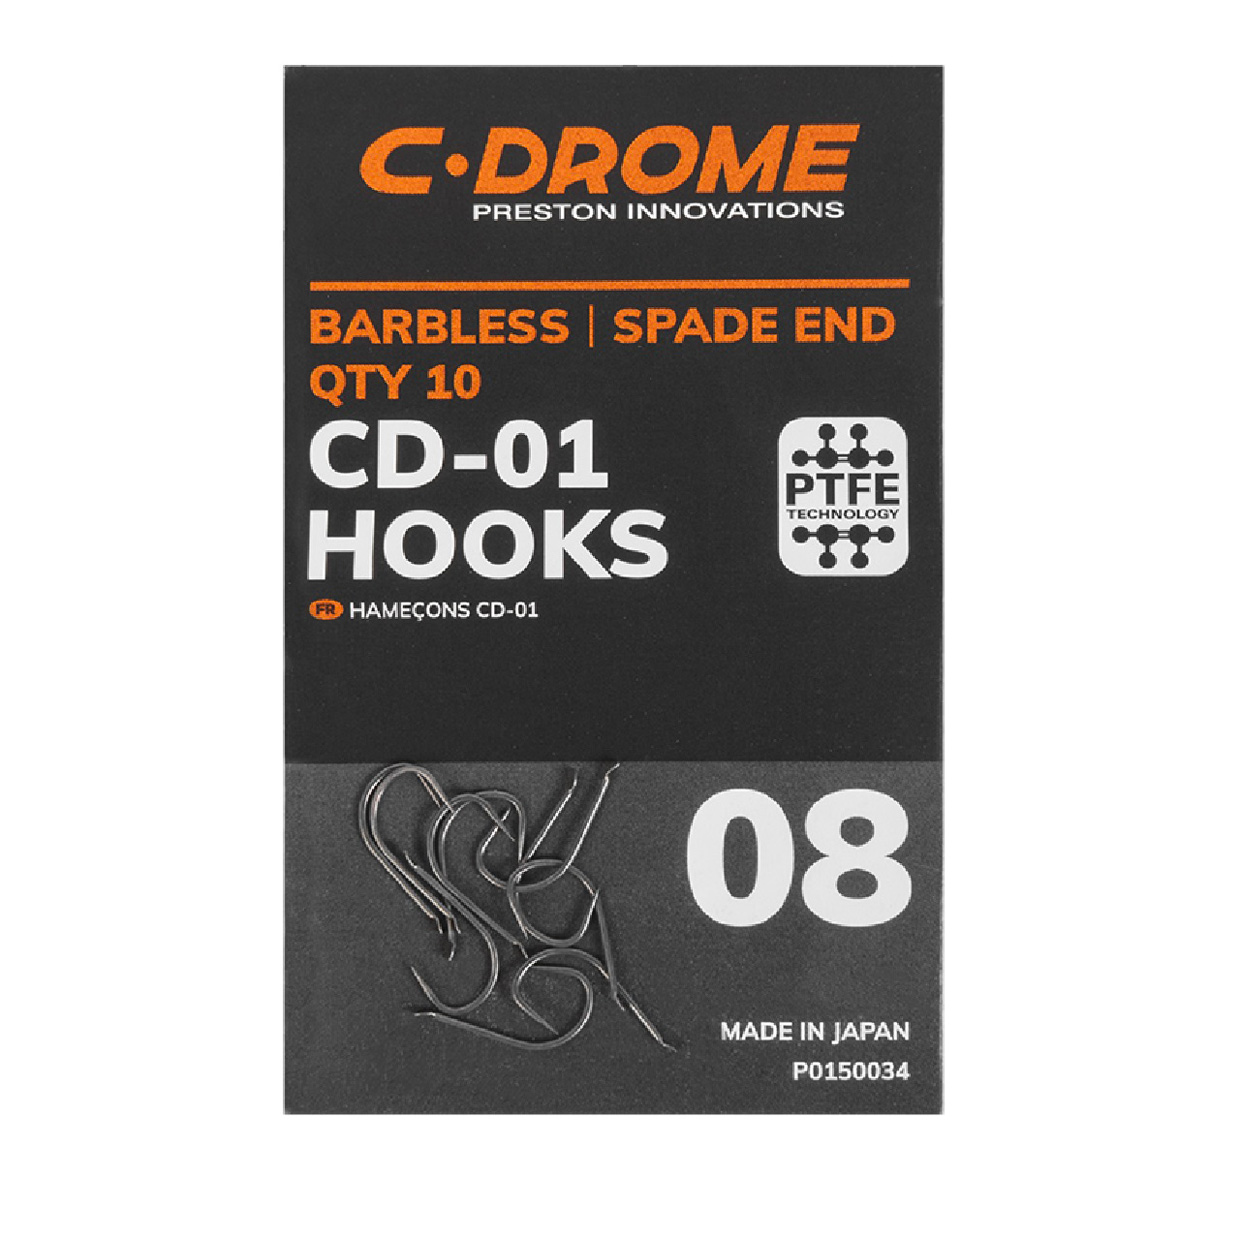 preston C-DROME CD-01 P0150034.jpg